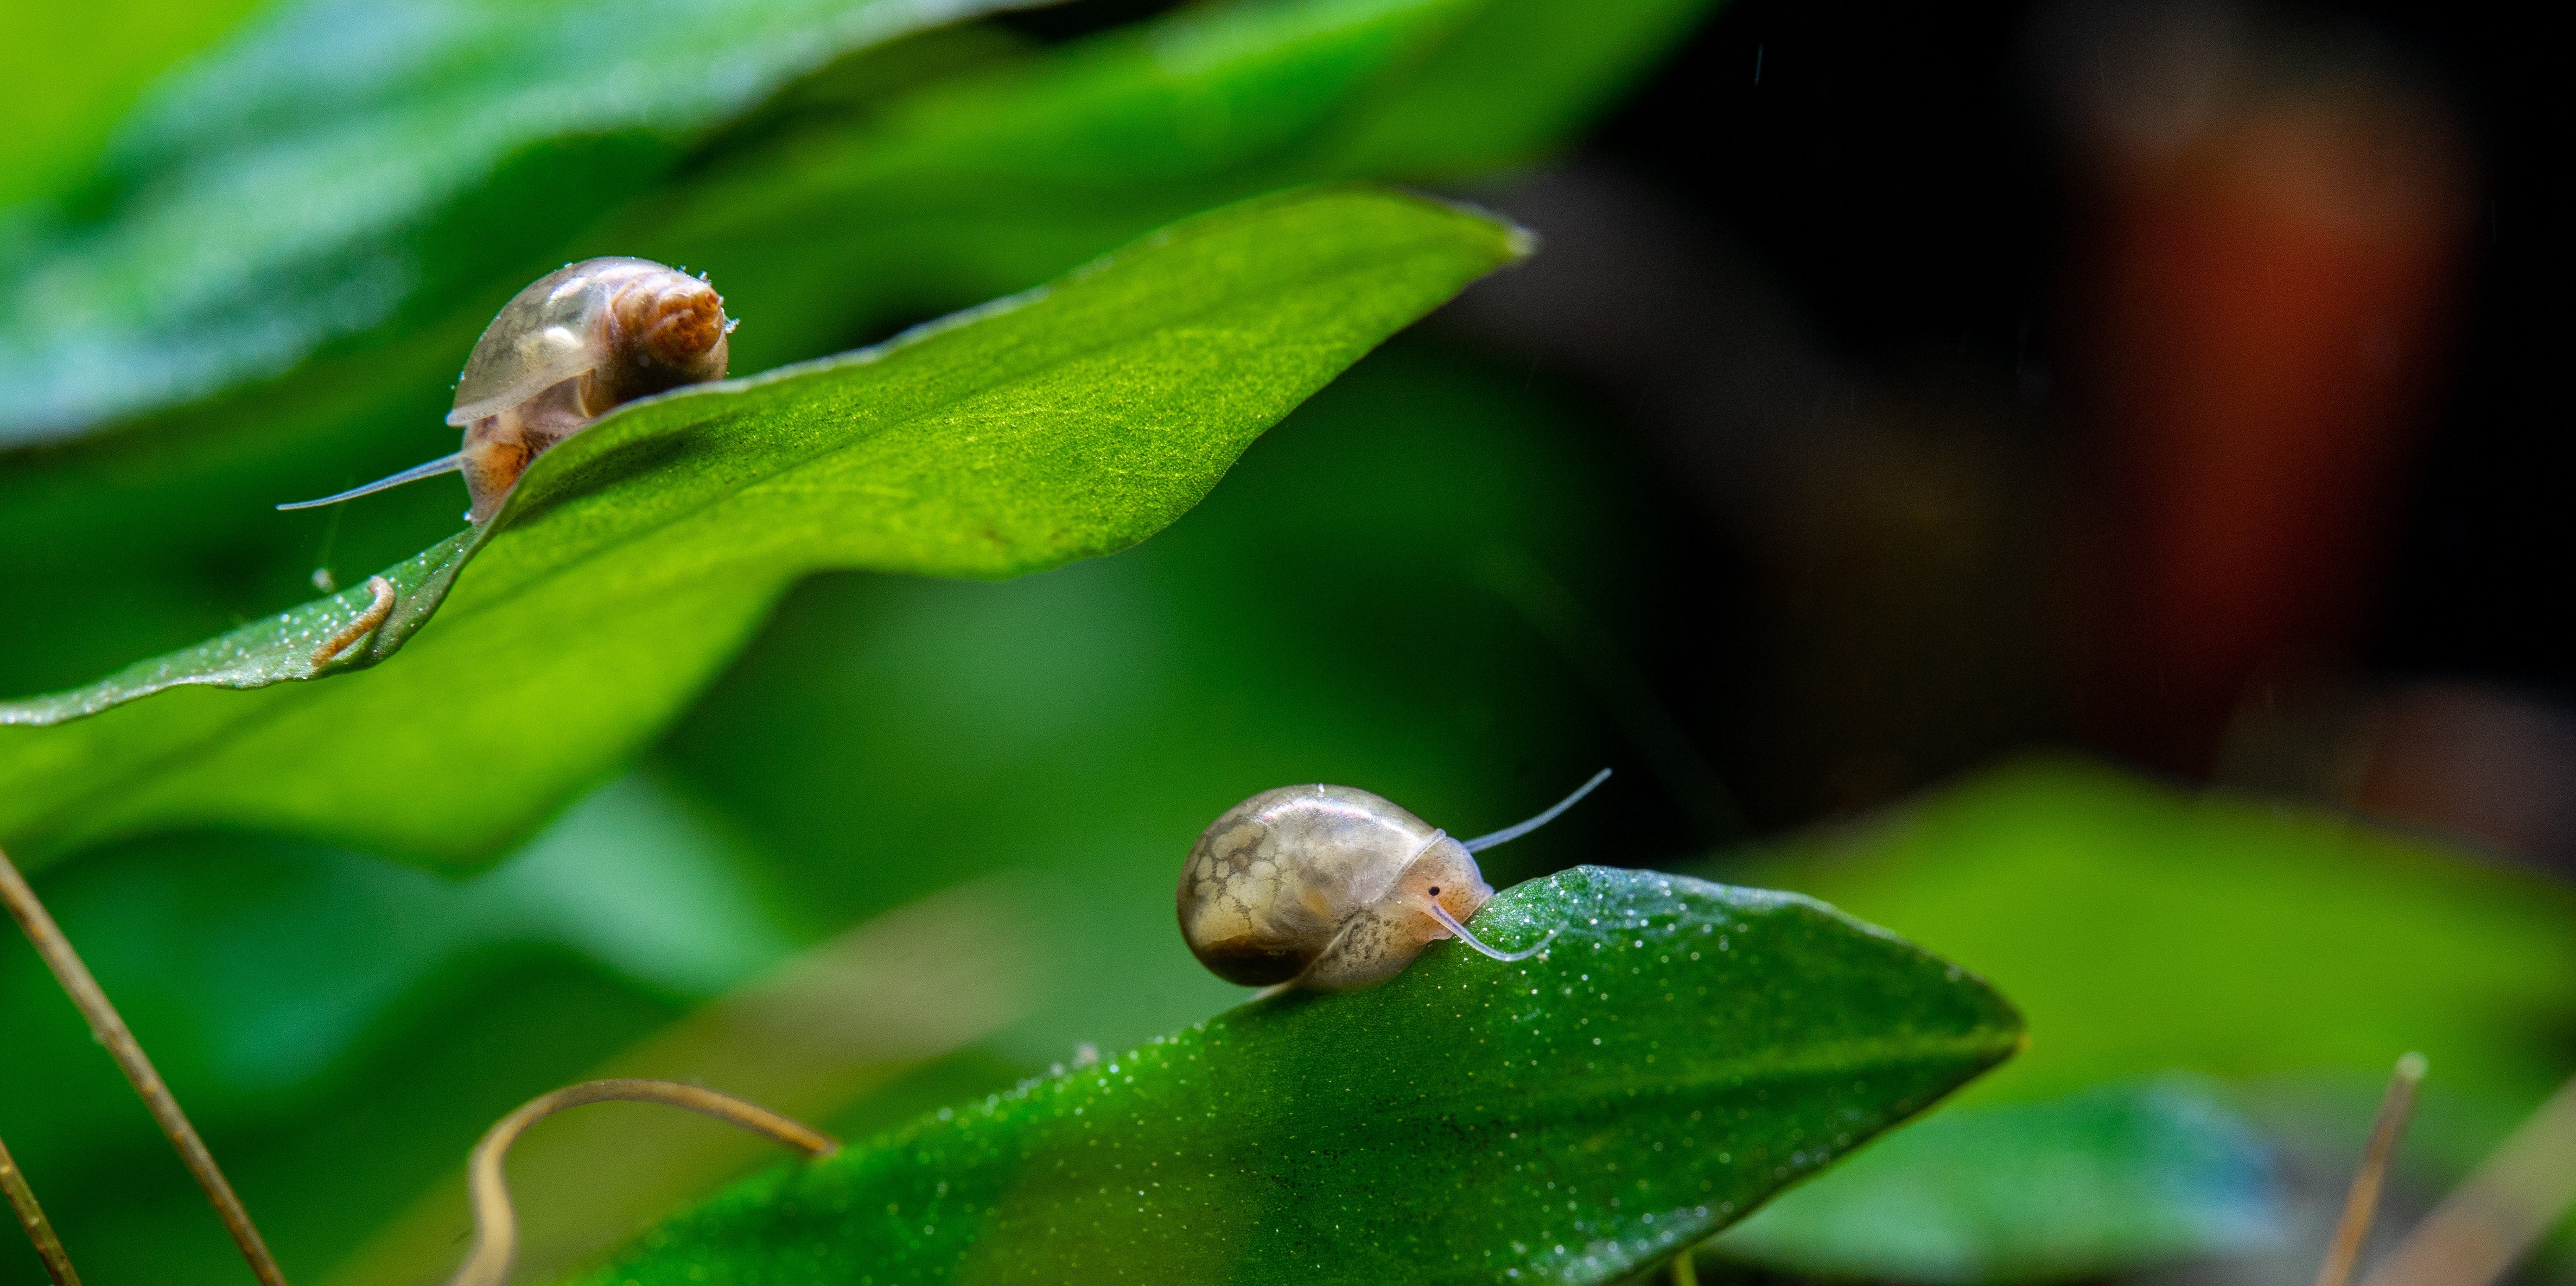 Ramshorn Snail Care Guide All about Ramshorn snails! Aquarium